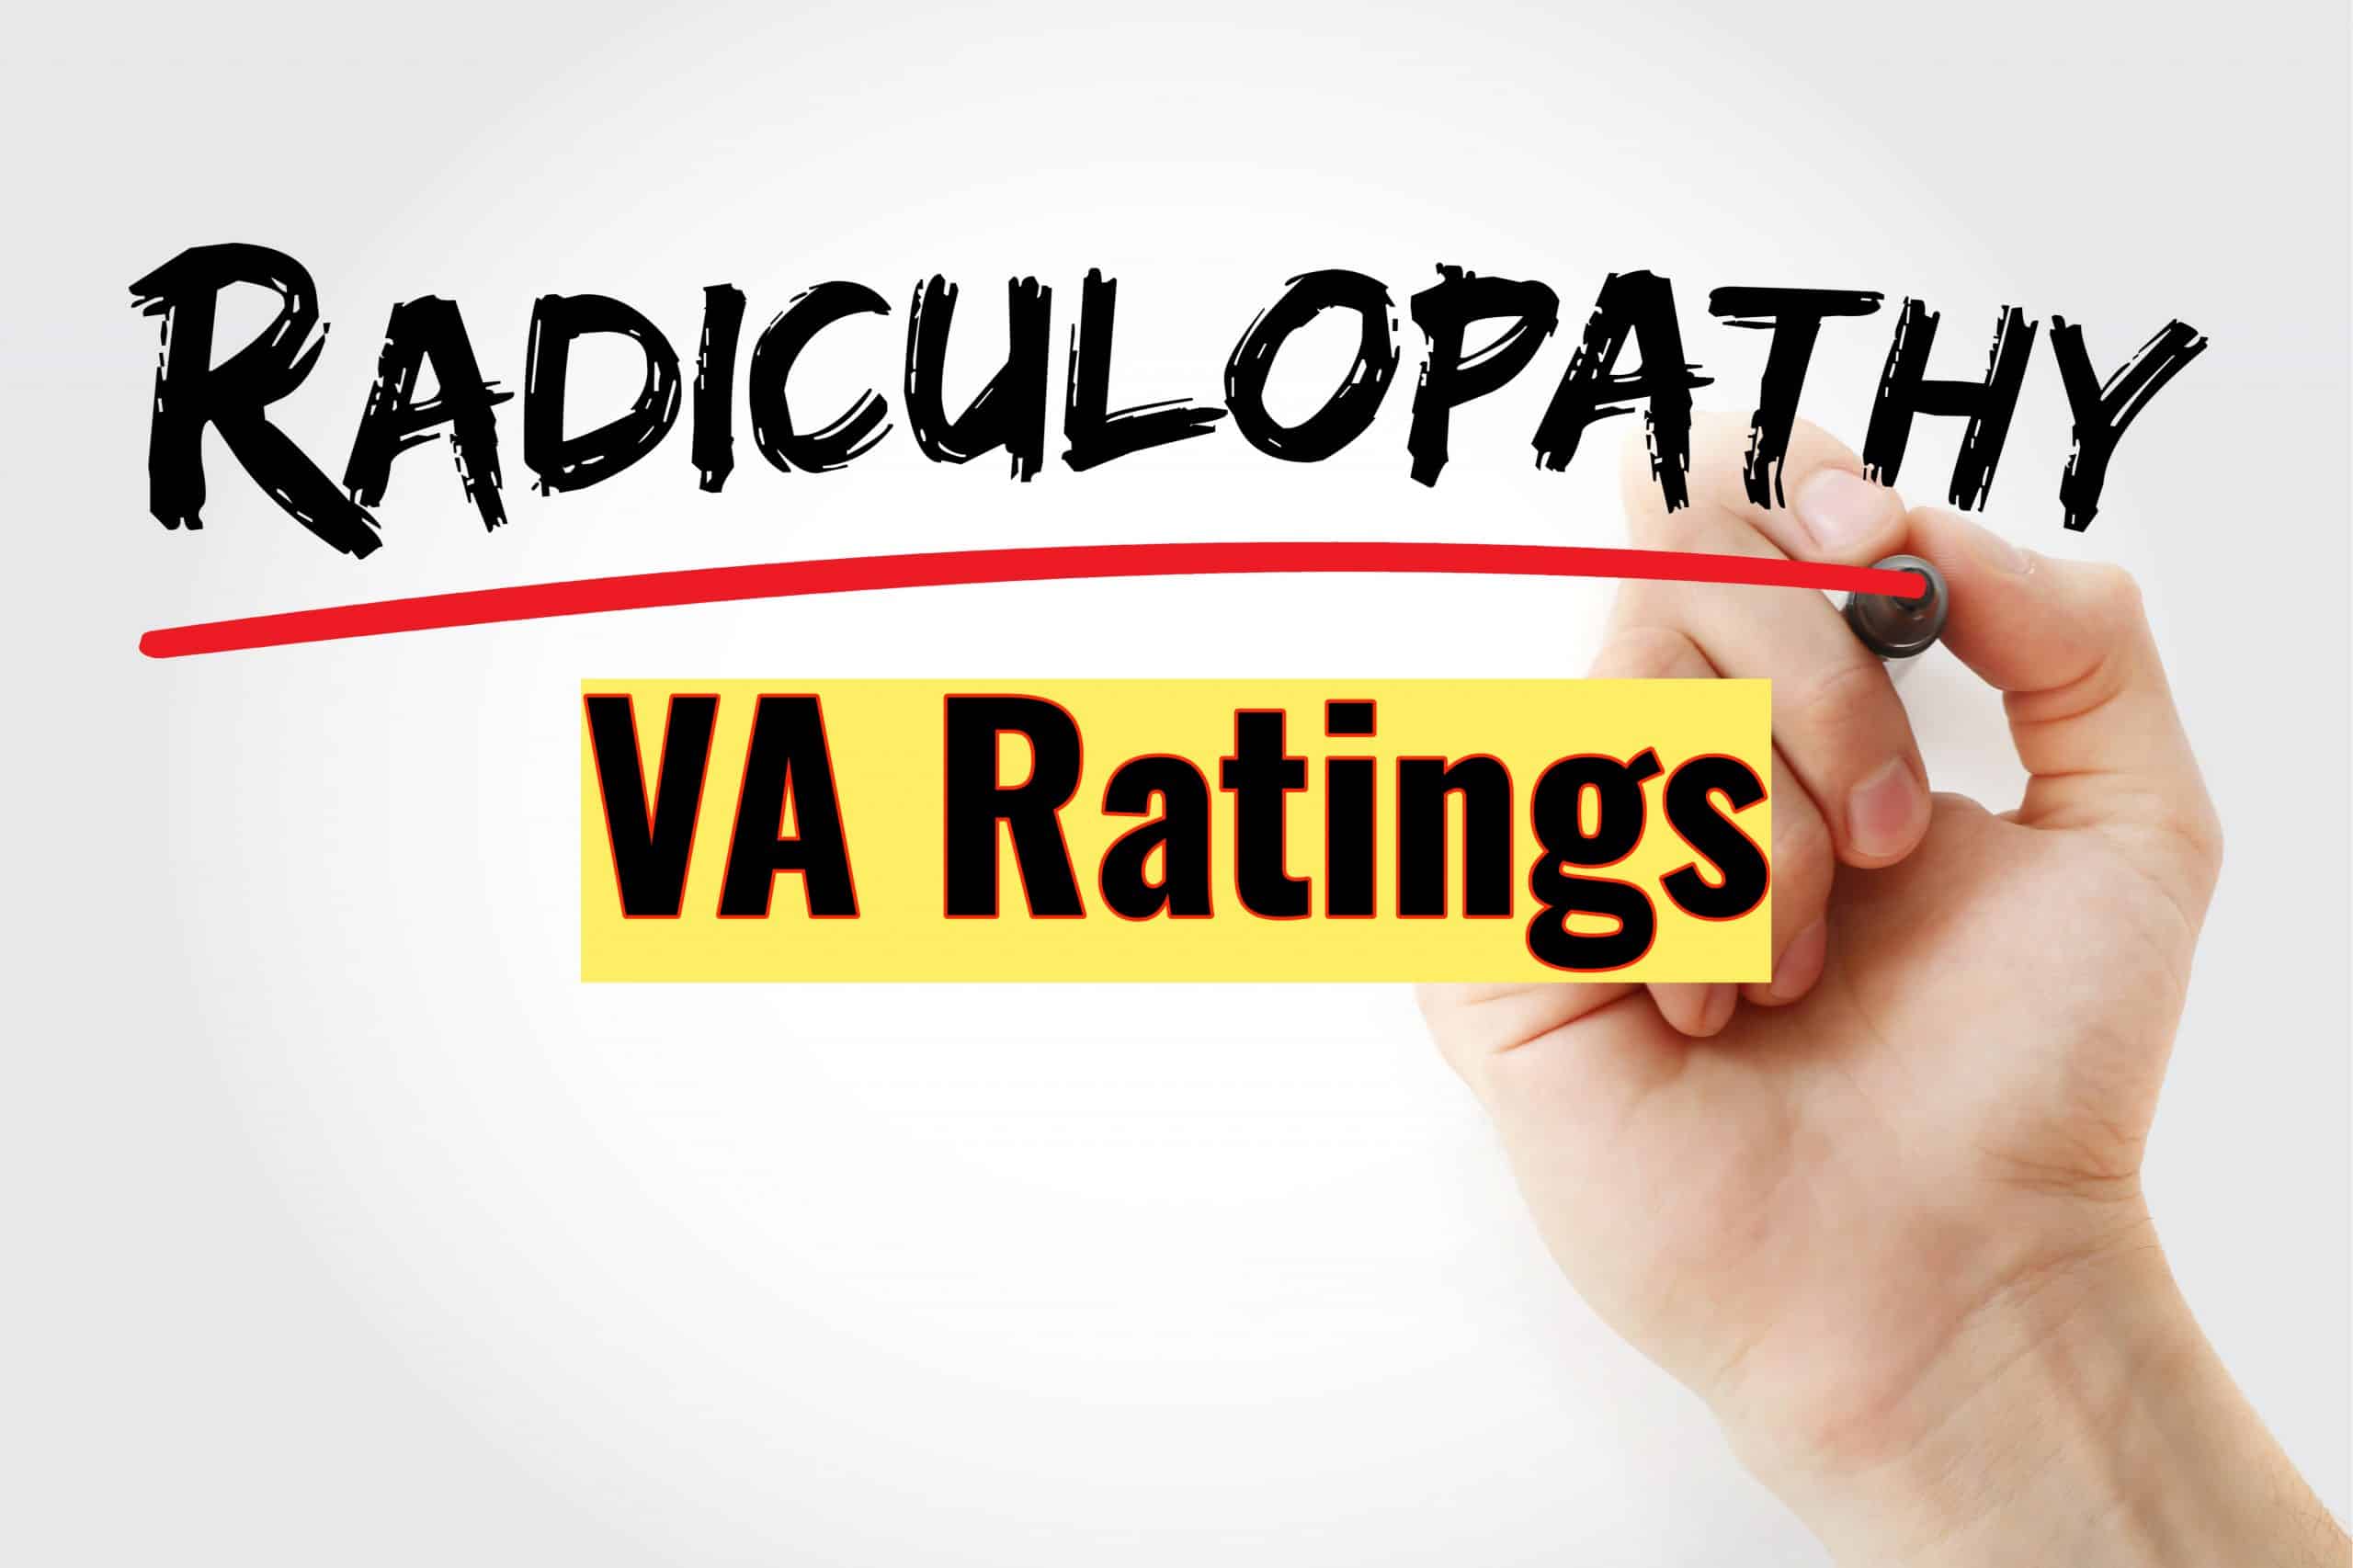 VA Disability Rating for Radiculopathy